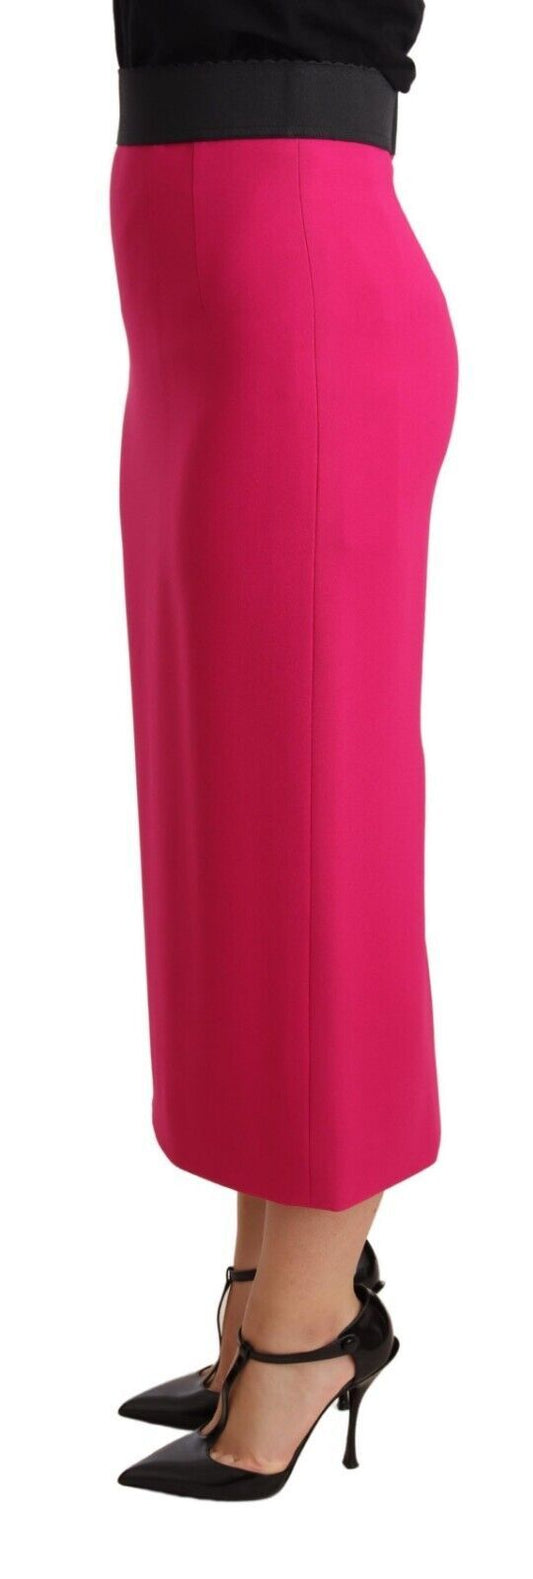 Dolce & Gabbana Elegant High-Waisted Pencil Skirt in Pink